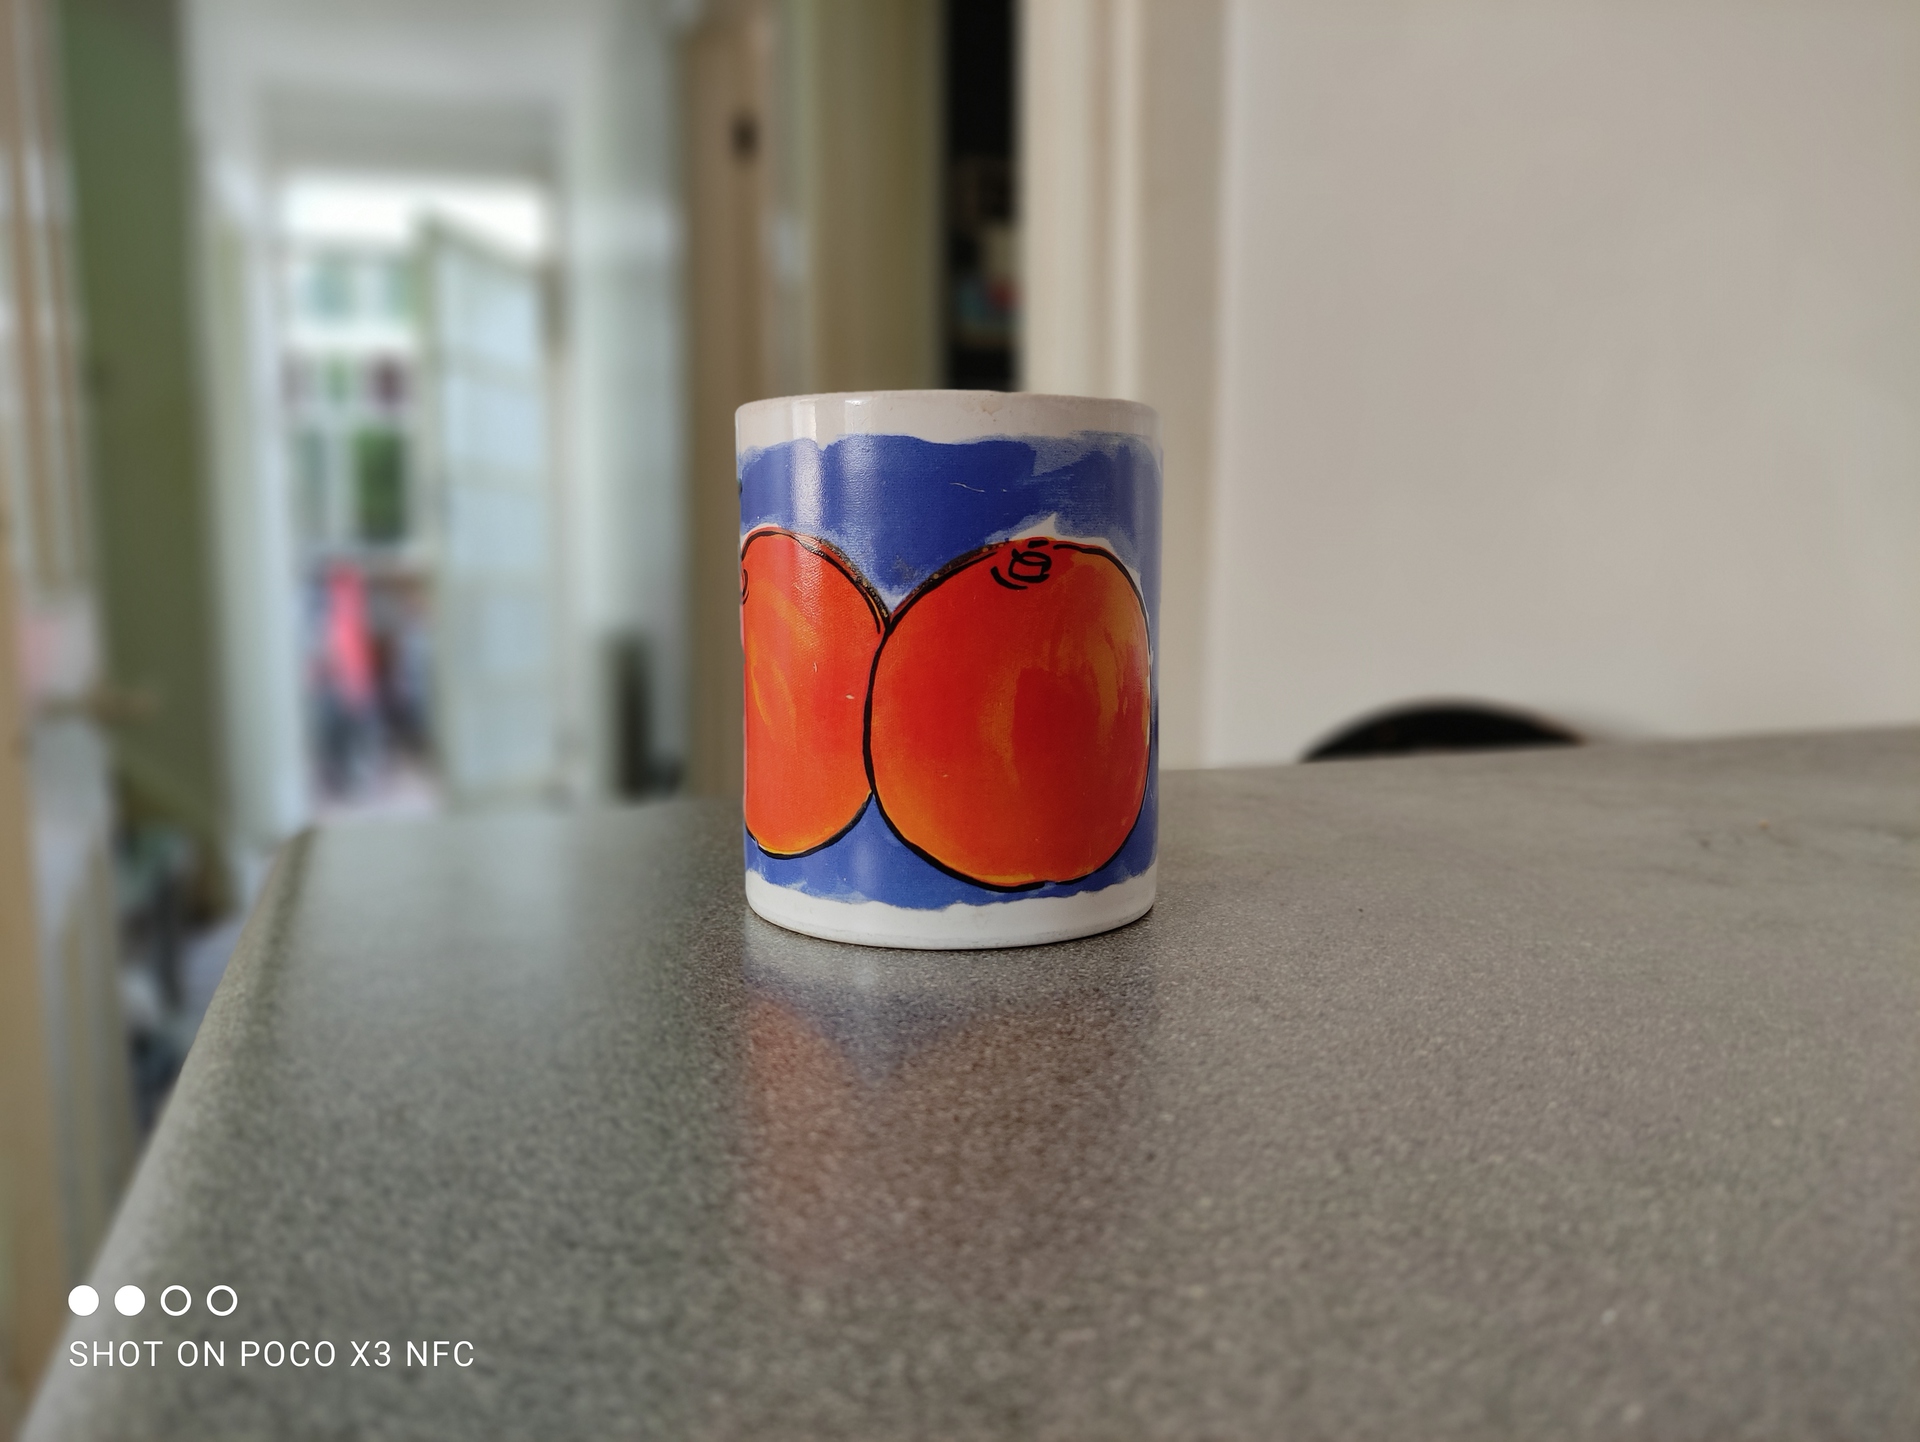 Xiaomi Poco X3 NFC indoor portrait mode test of a mug